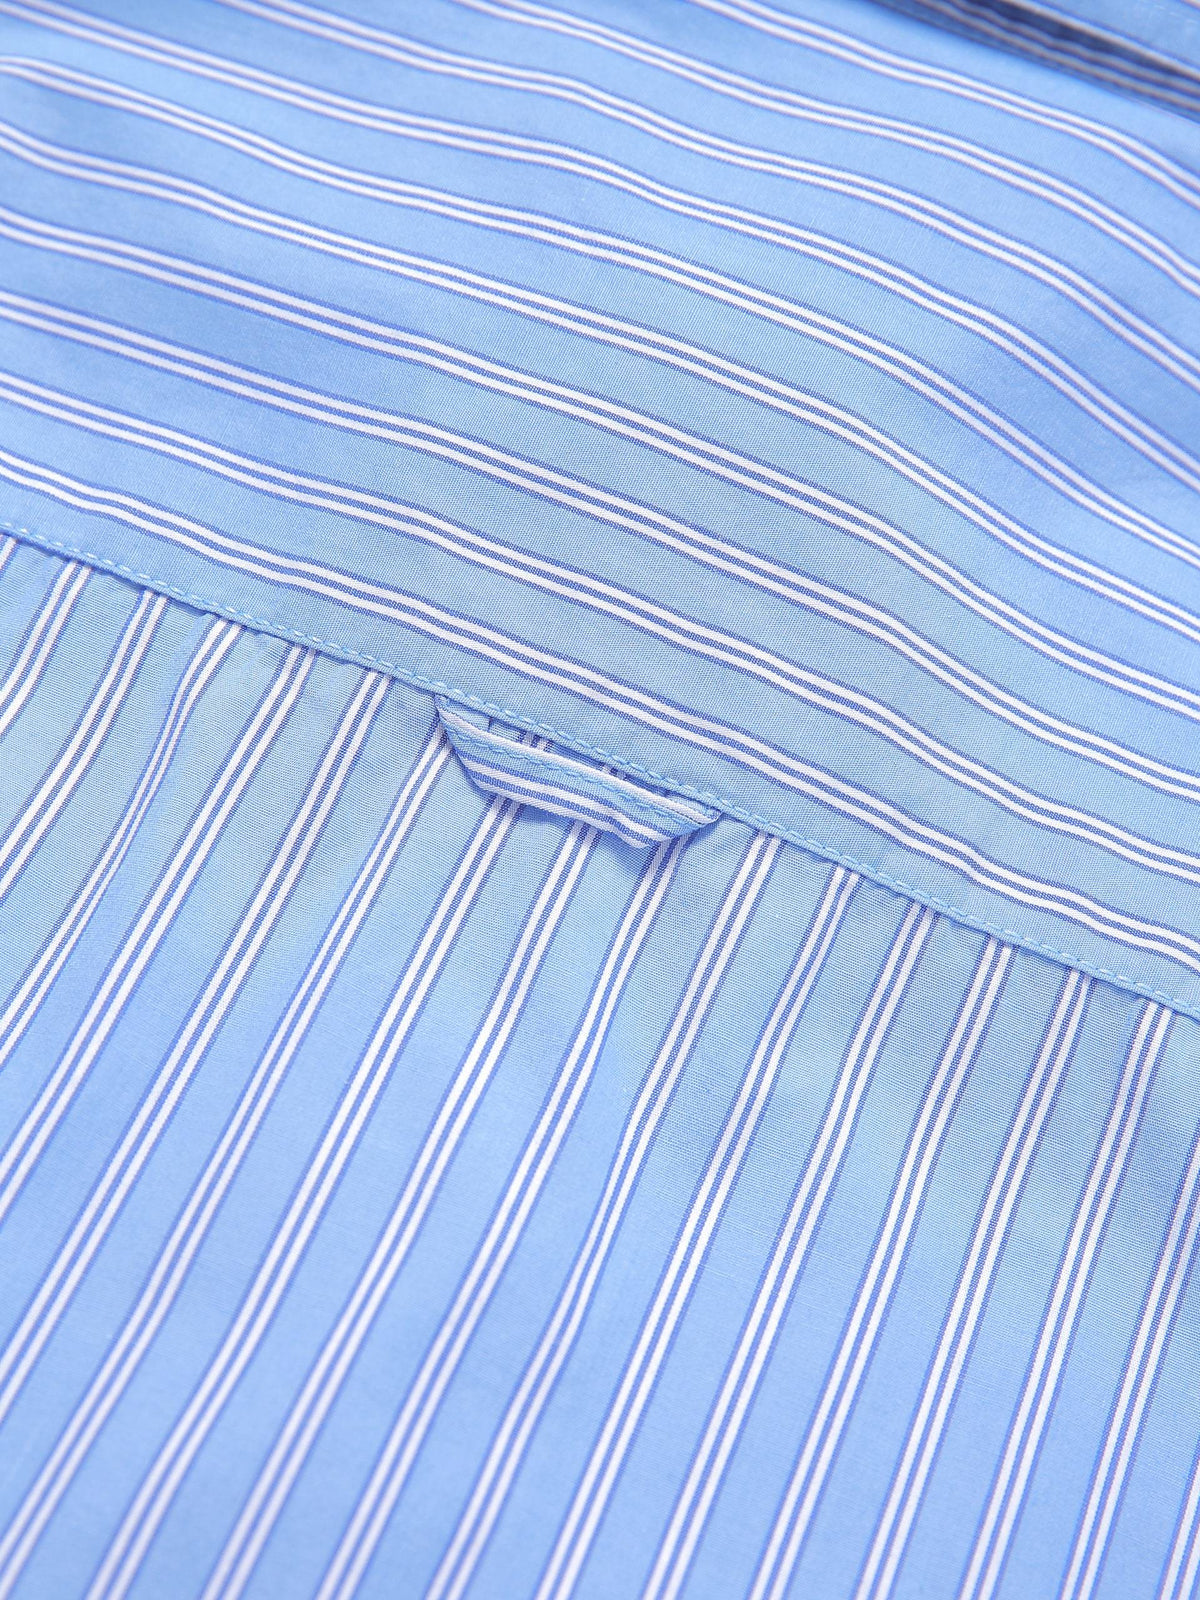 MI-Logo Striped Shirt Shirts 